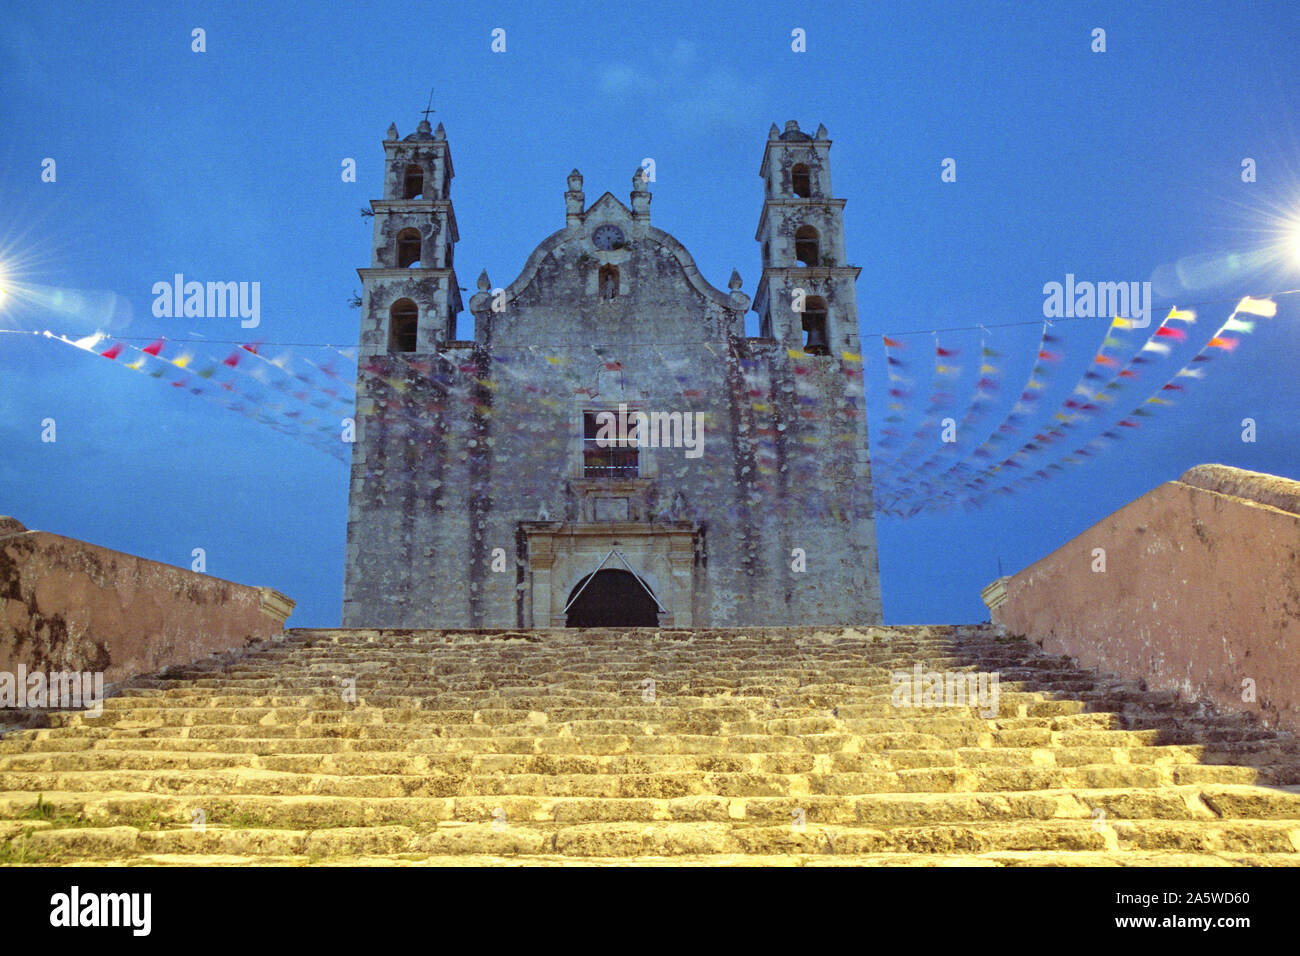 Tecoh, Yucatan, Mexico - 2015:Convent in Tecoh, Yucatan, Mexico dedicated to the Accession Virgin (vírgen de la asunción). Built over a Mayan pyramid Stock Photo